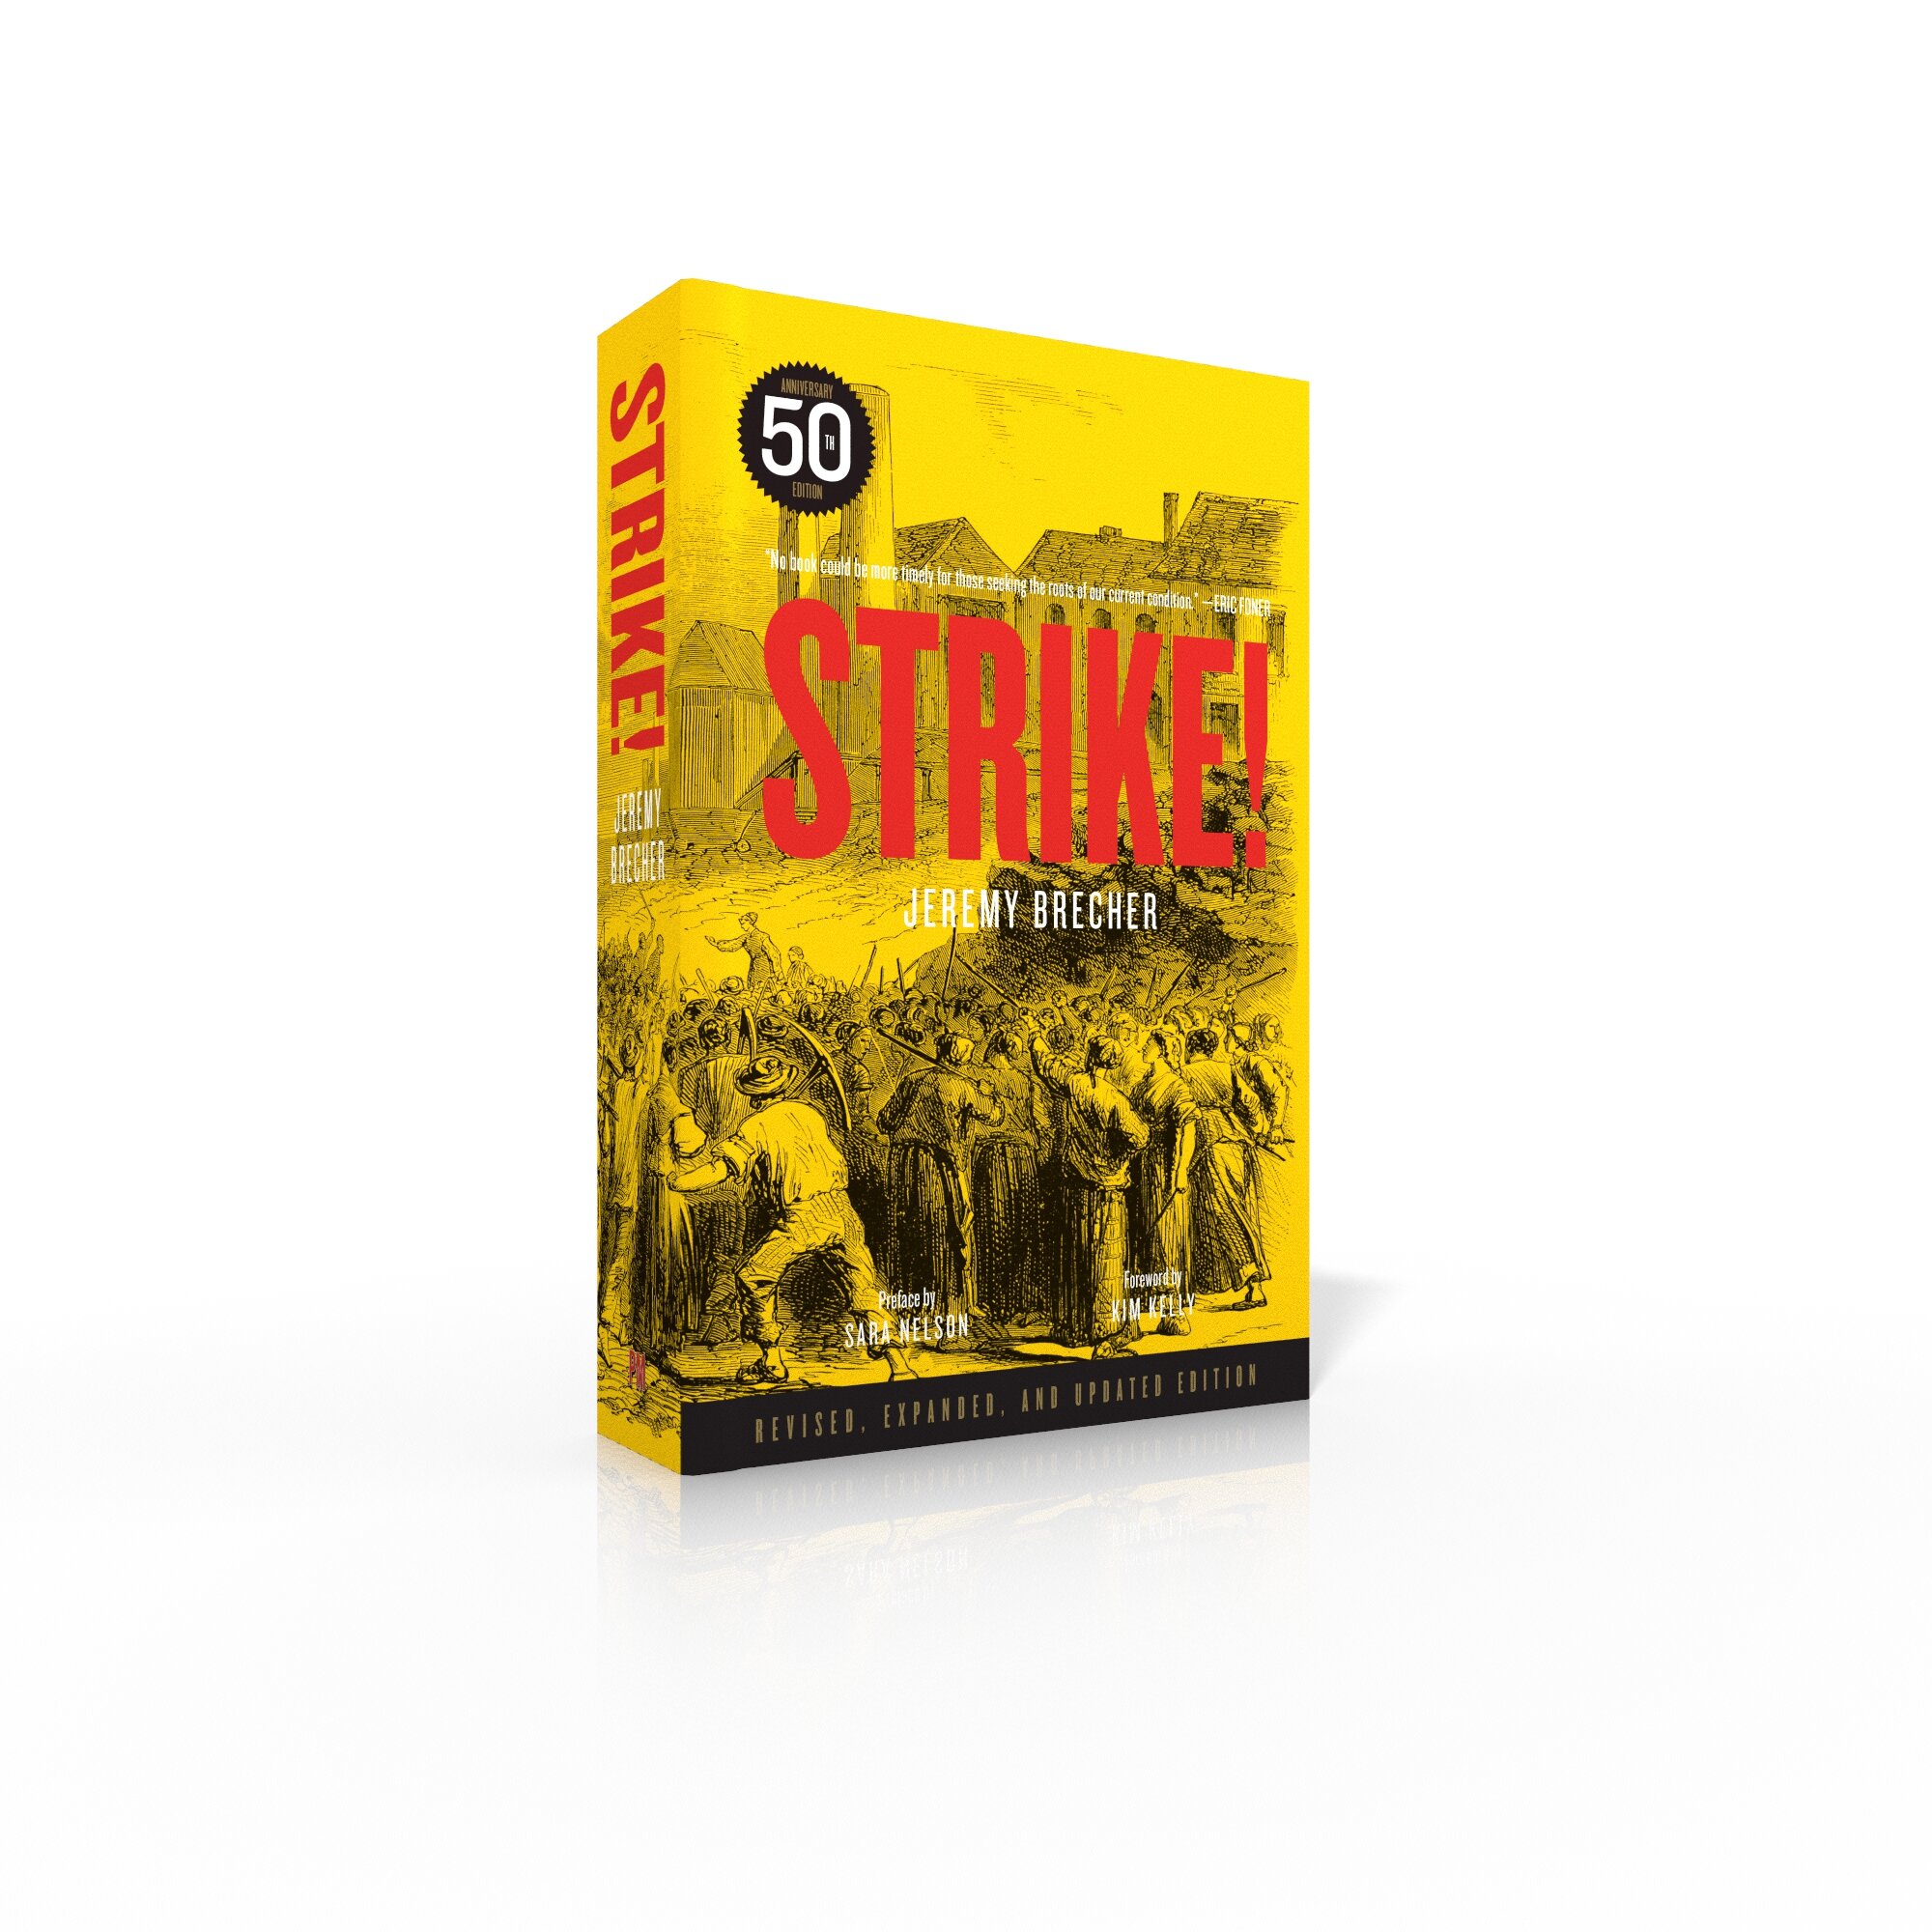 Strike_50th_anniversary_3D.jpg